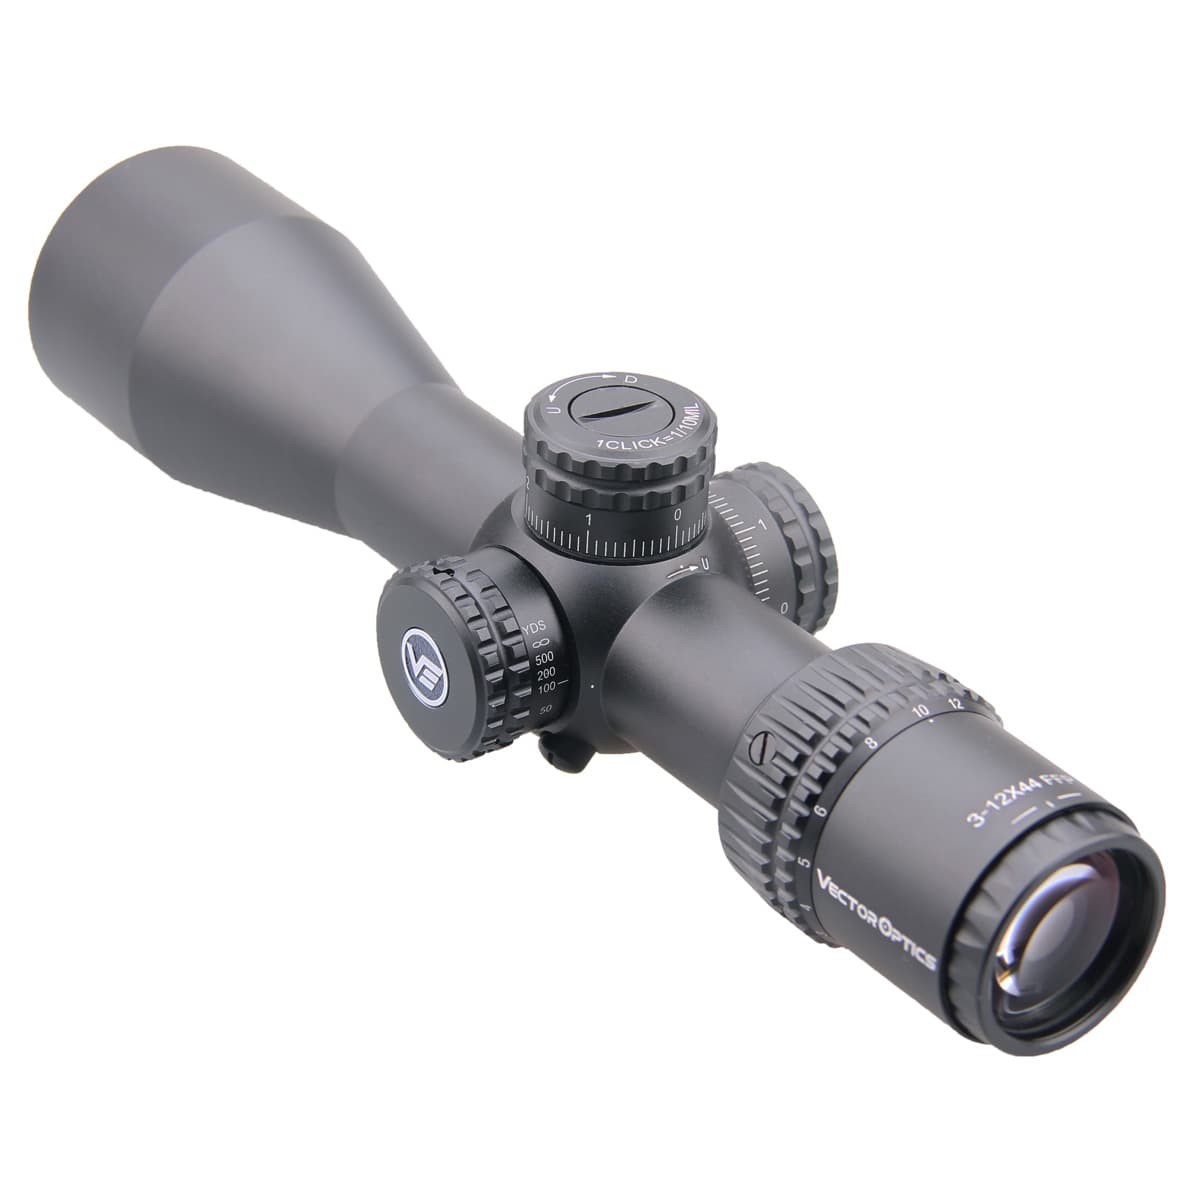 قیمت دوربین سلاح شکاری مدل 44*12-3